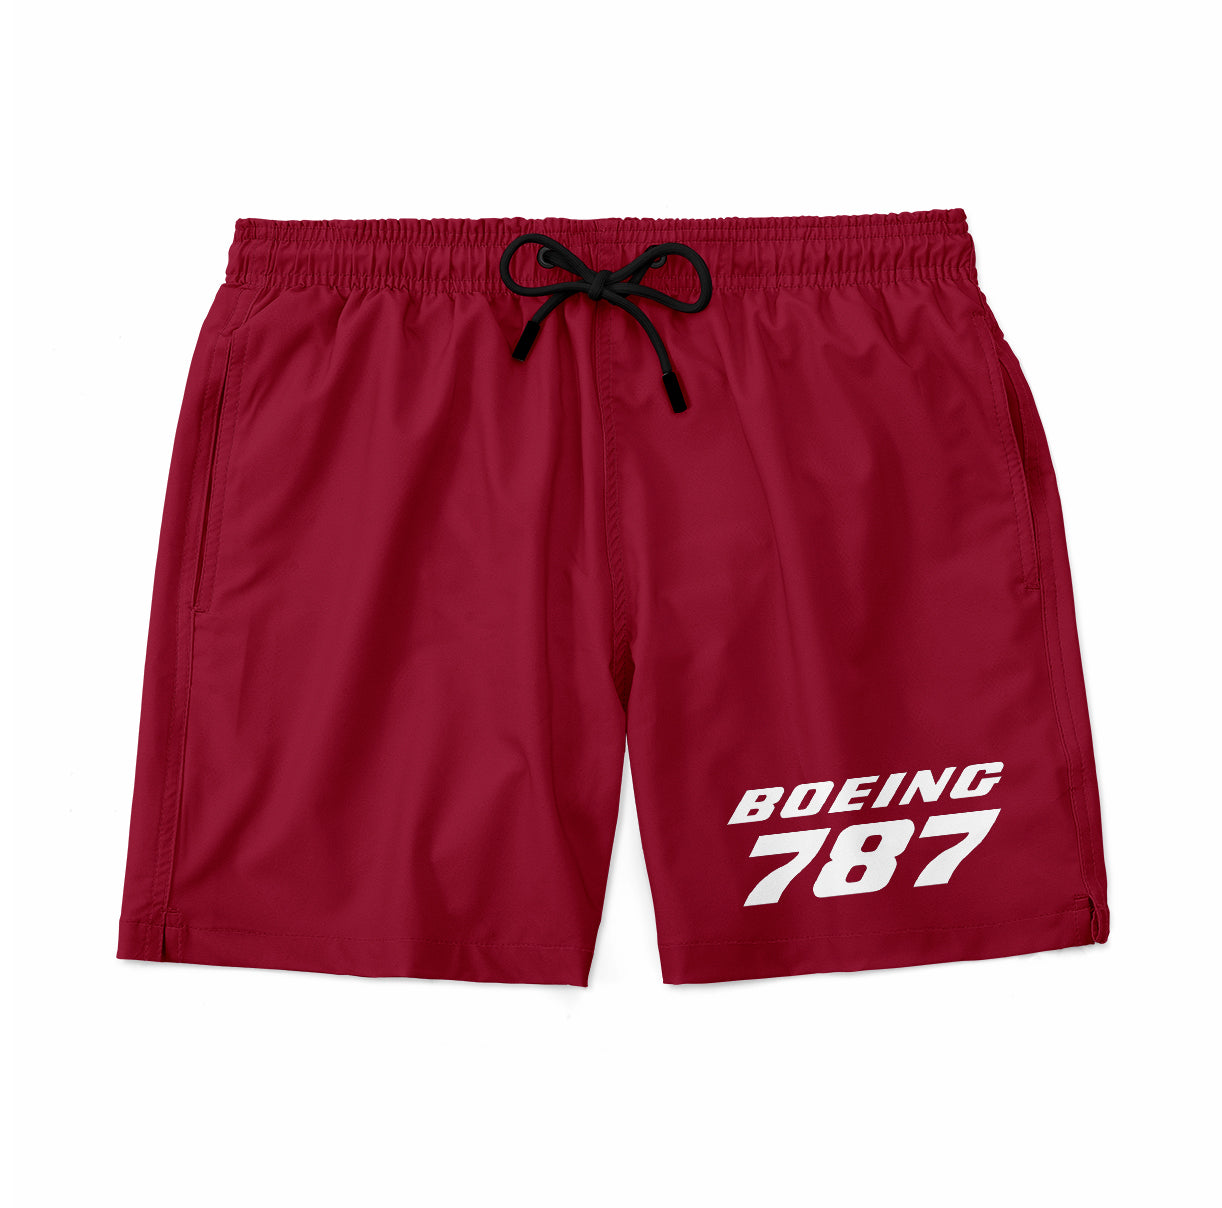 Boeing 787 & Text Designed Swim Trunks & Shorts